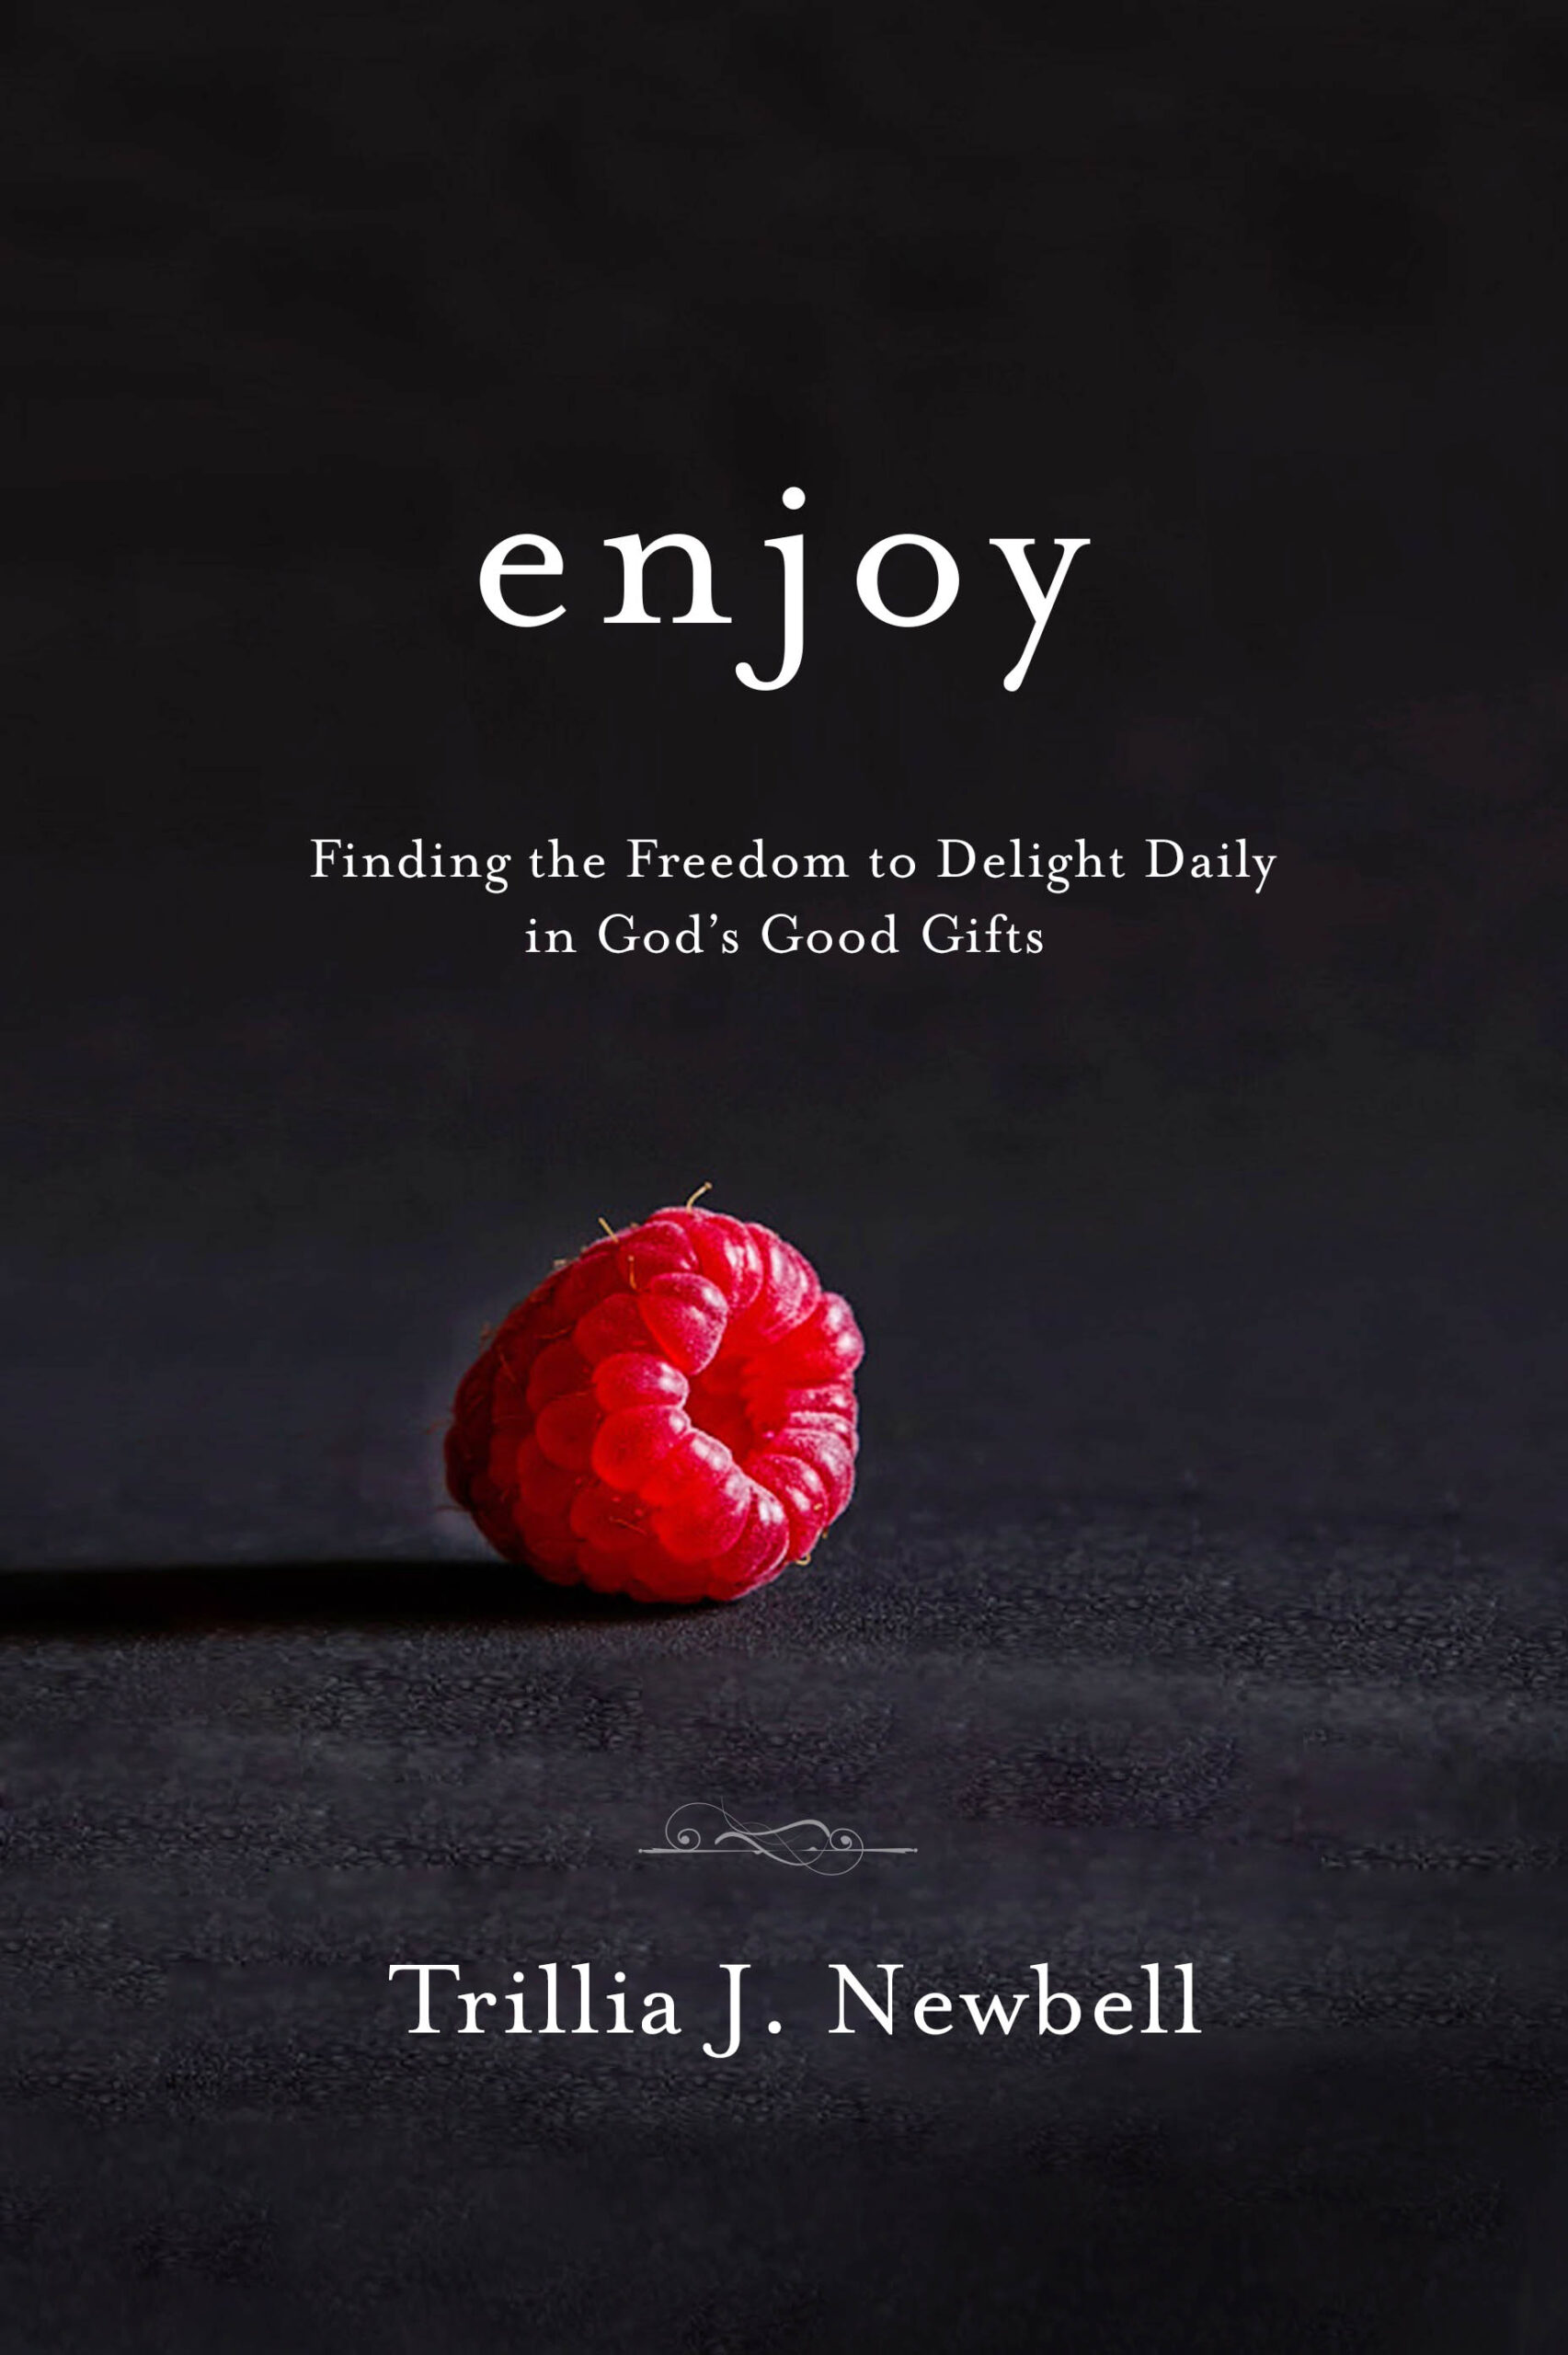 Enjoy by Trillia J. Newbell book cover